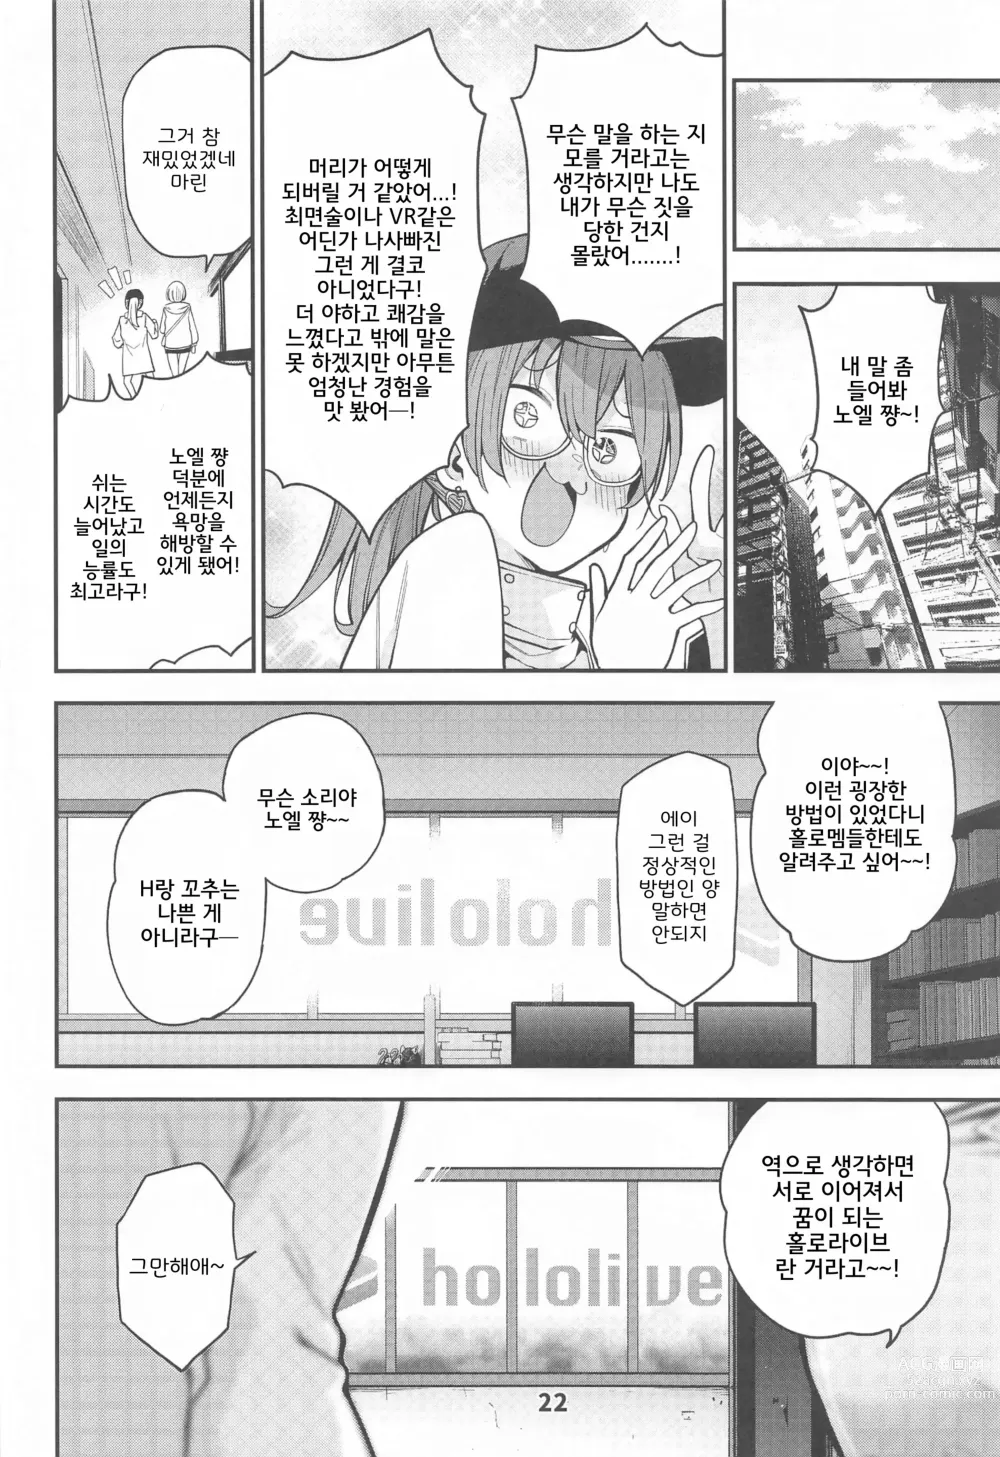 Page 23 of doujinshi 호쇼의 쇼타 이치미 망상극장